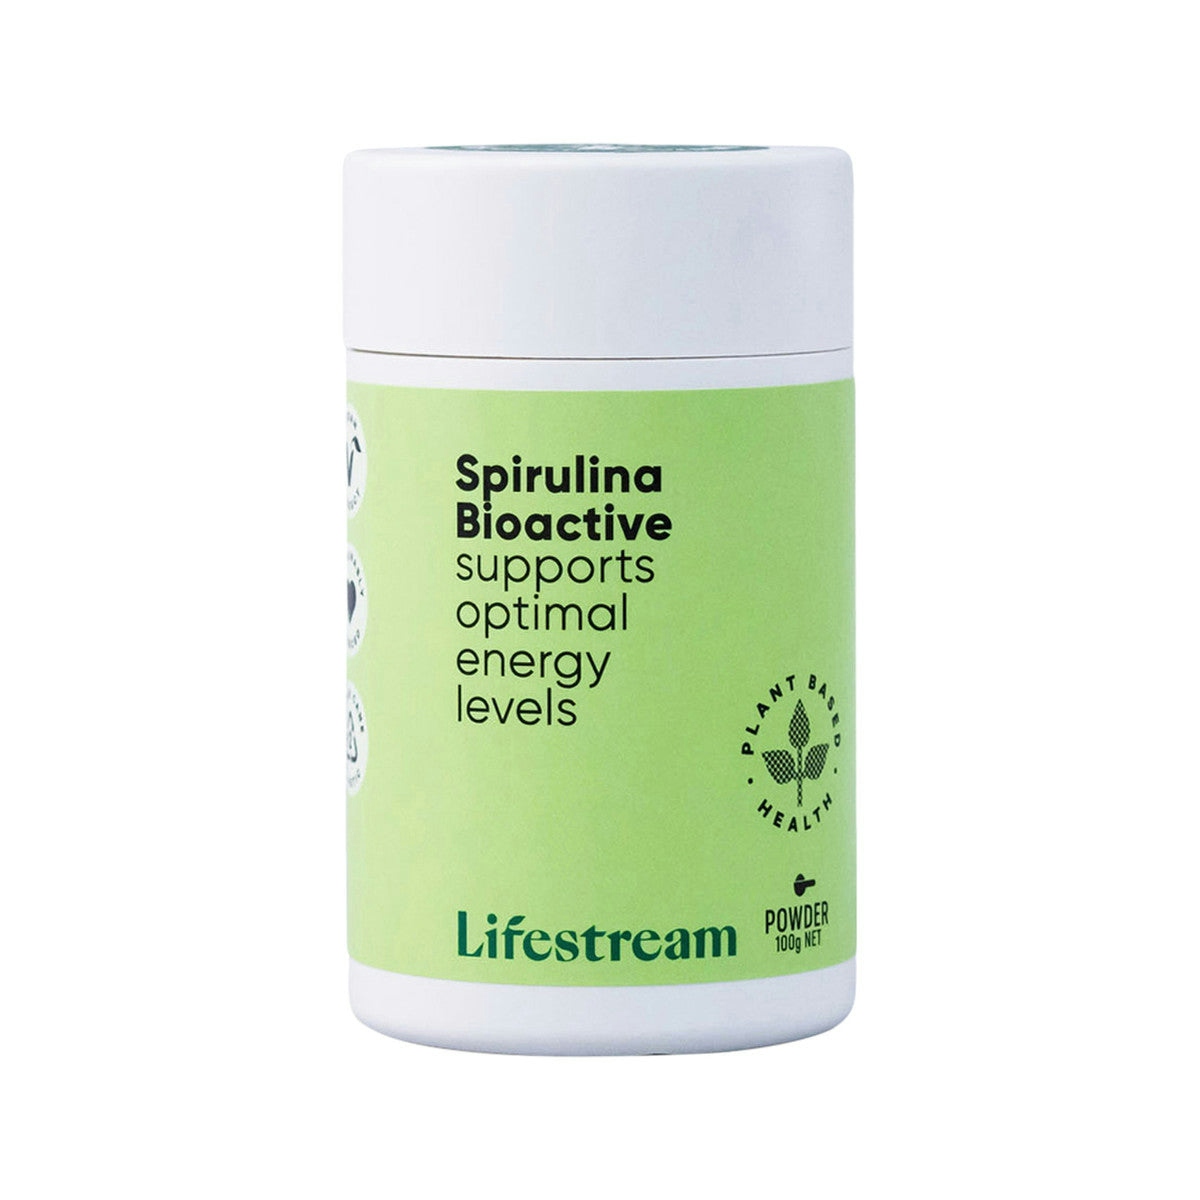 image of Lifestream Spirulina Bioactive Powder 100g on white background